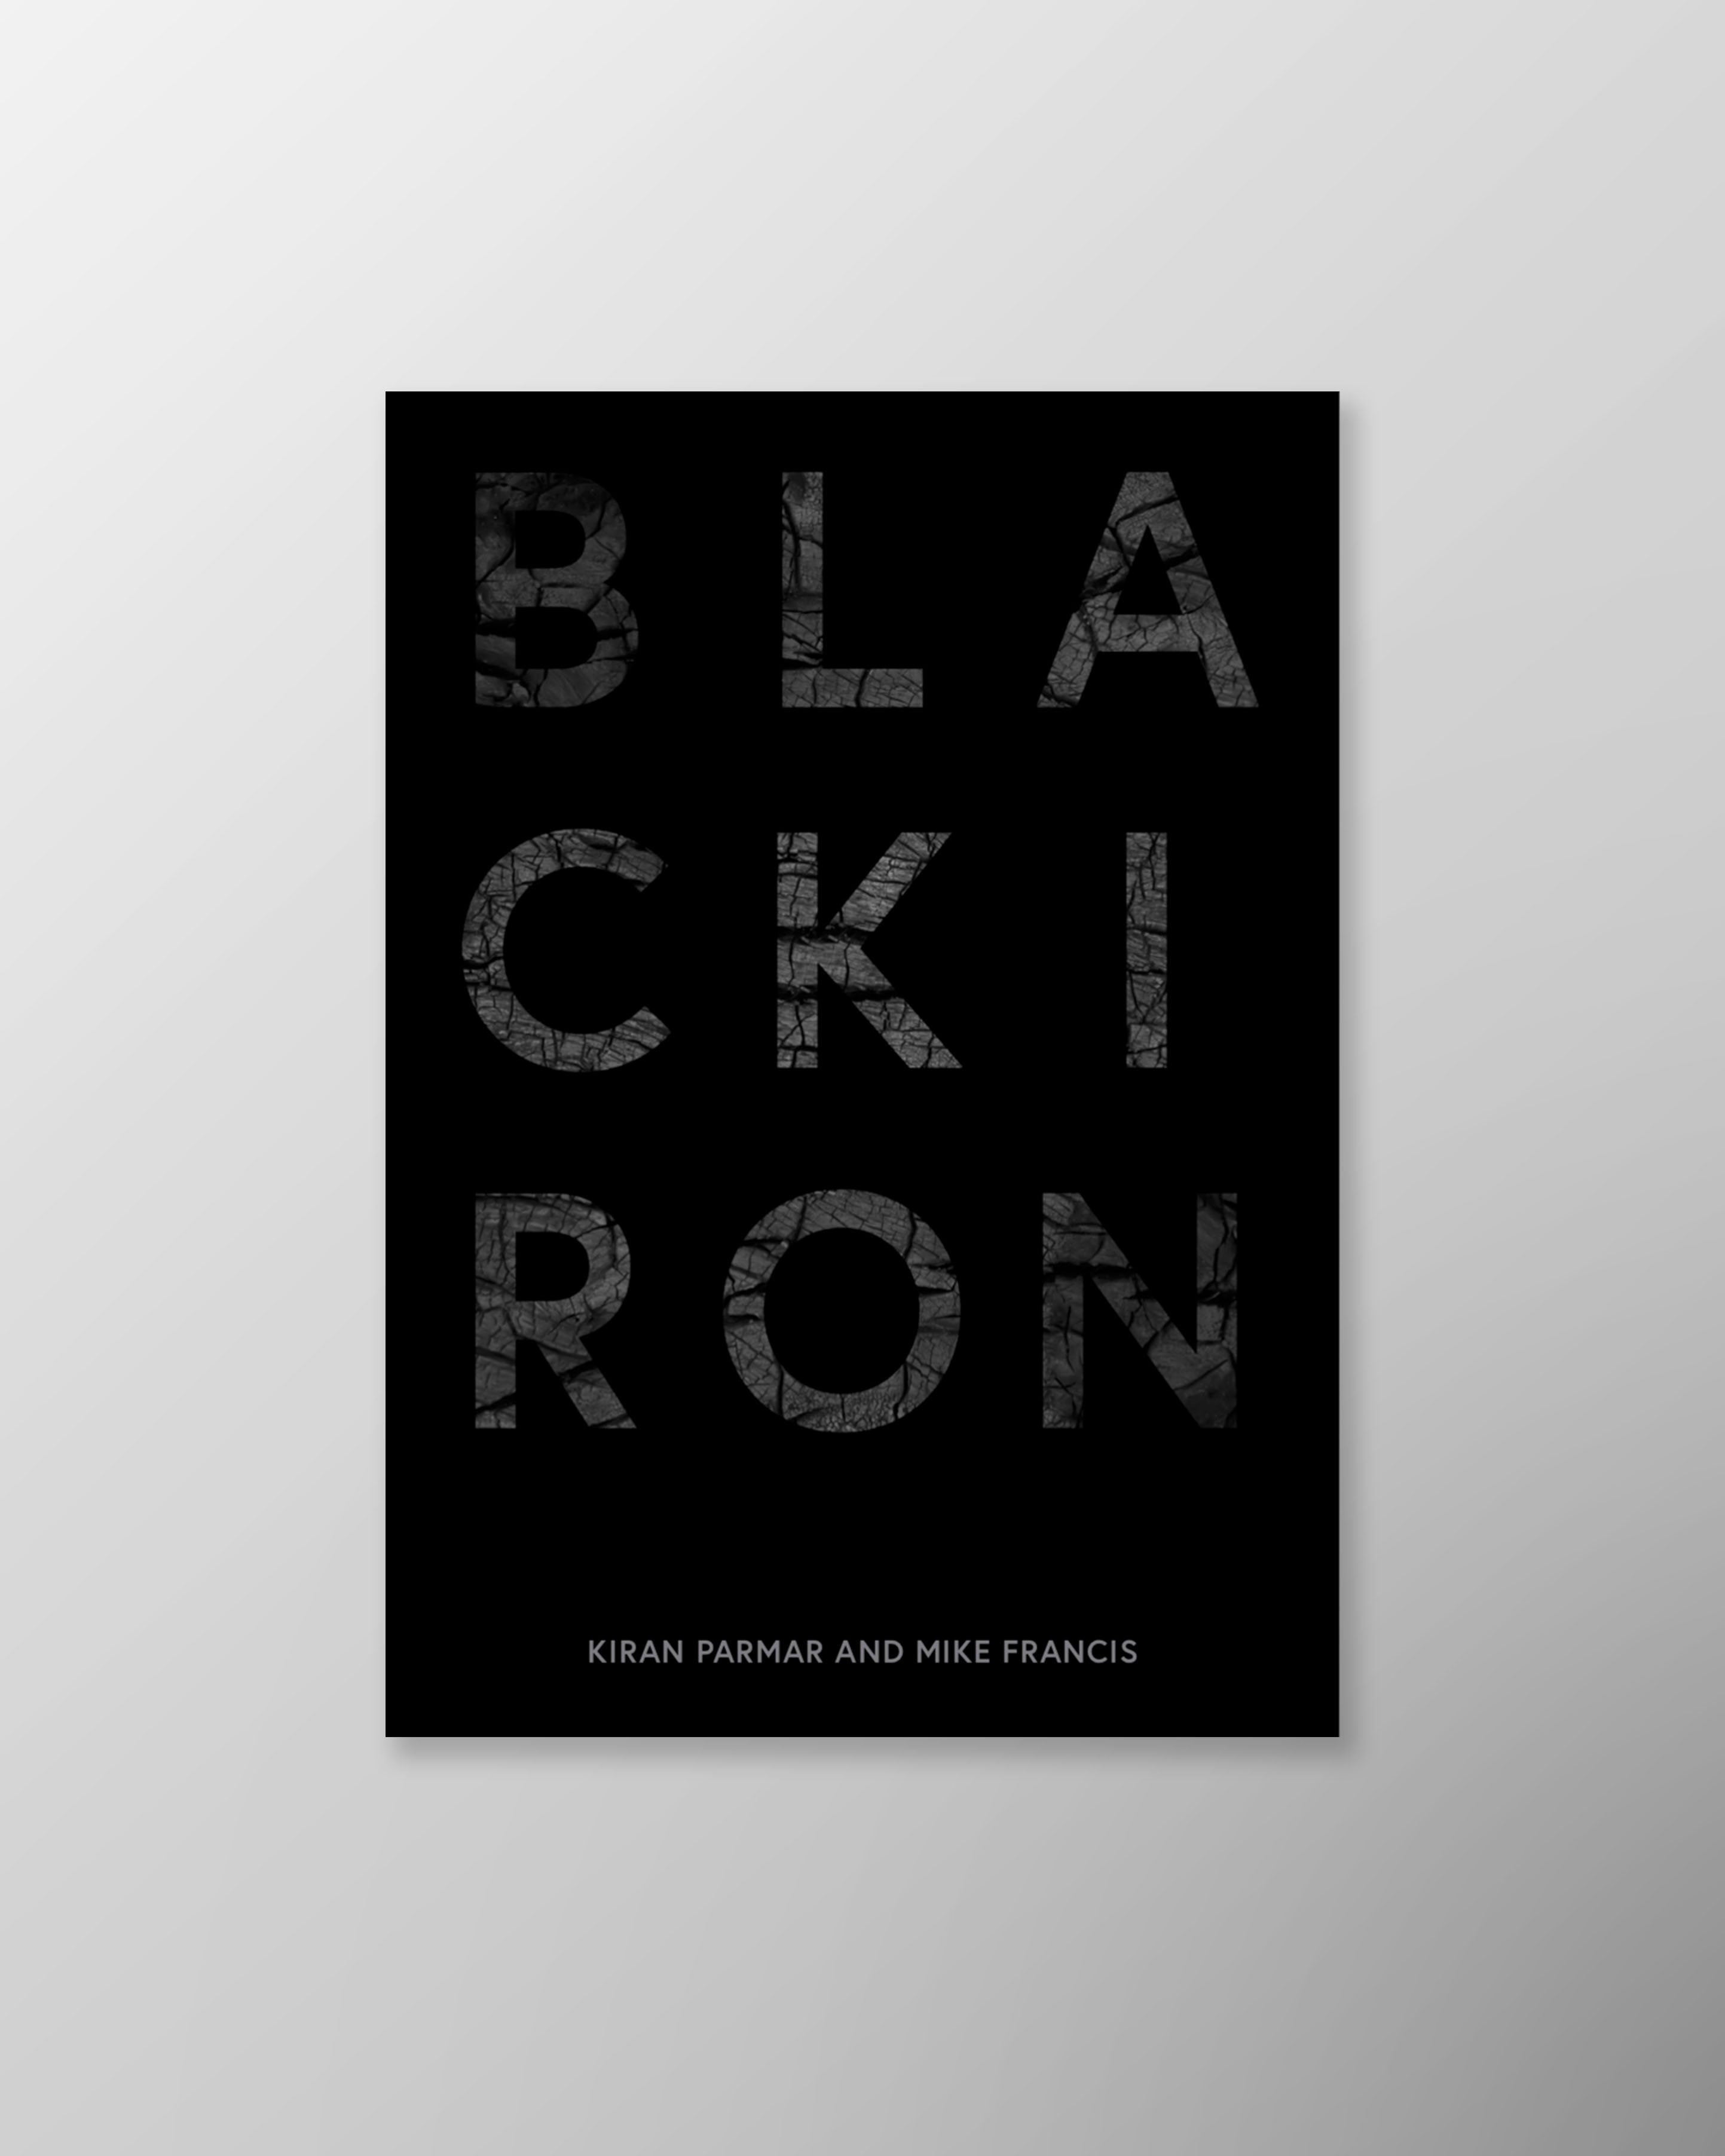 Black Iron, by Kiran Parmar and Mike Francis